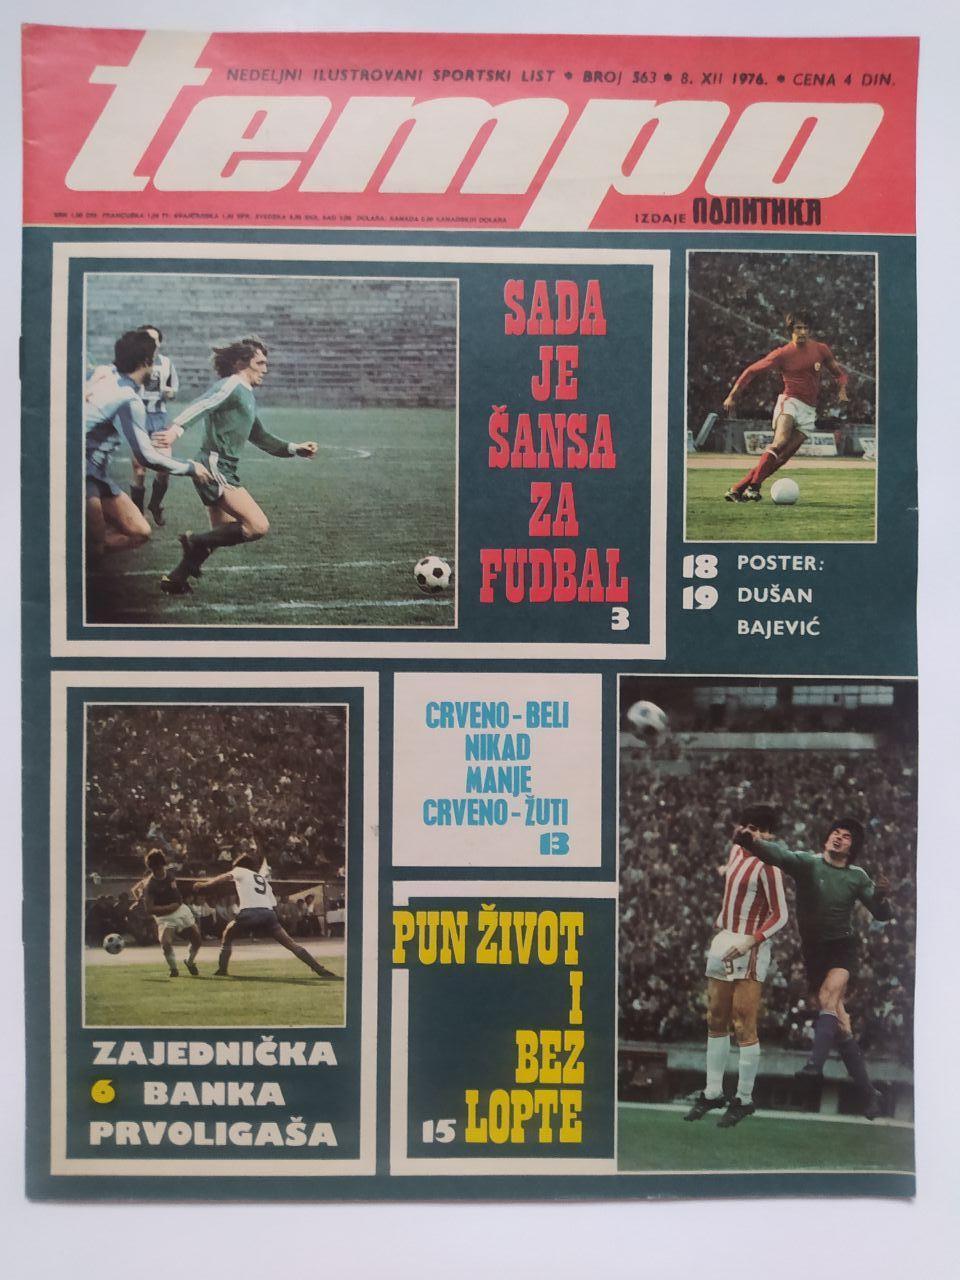 Спортивный журнал tempo Белград Югославия № 563 за 1976 год